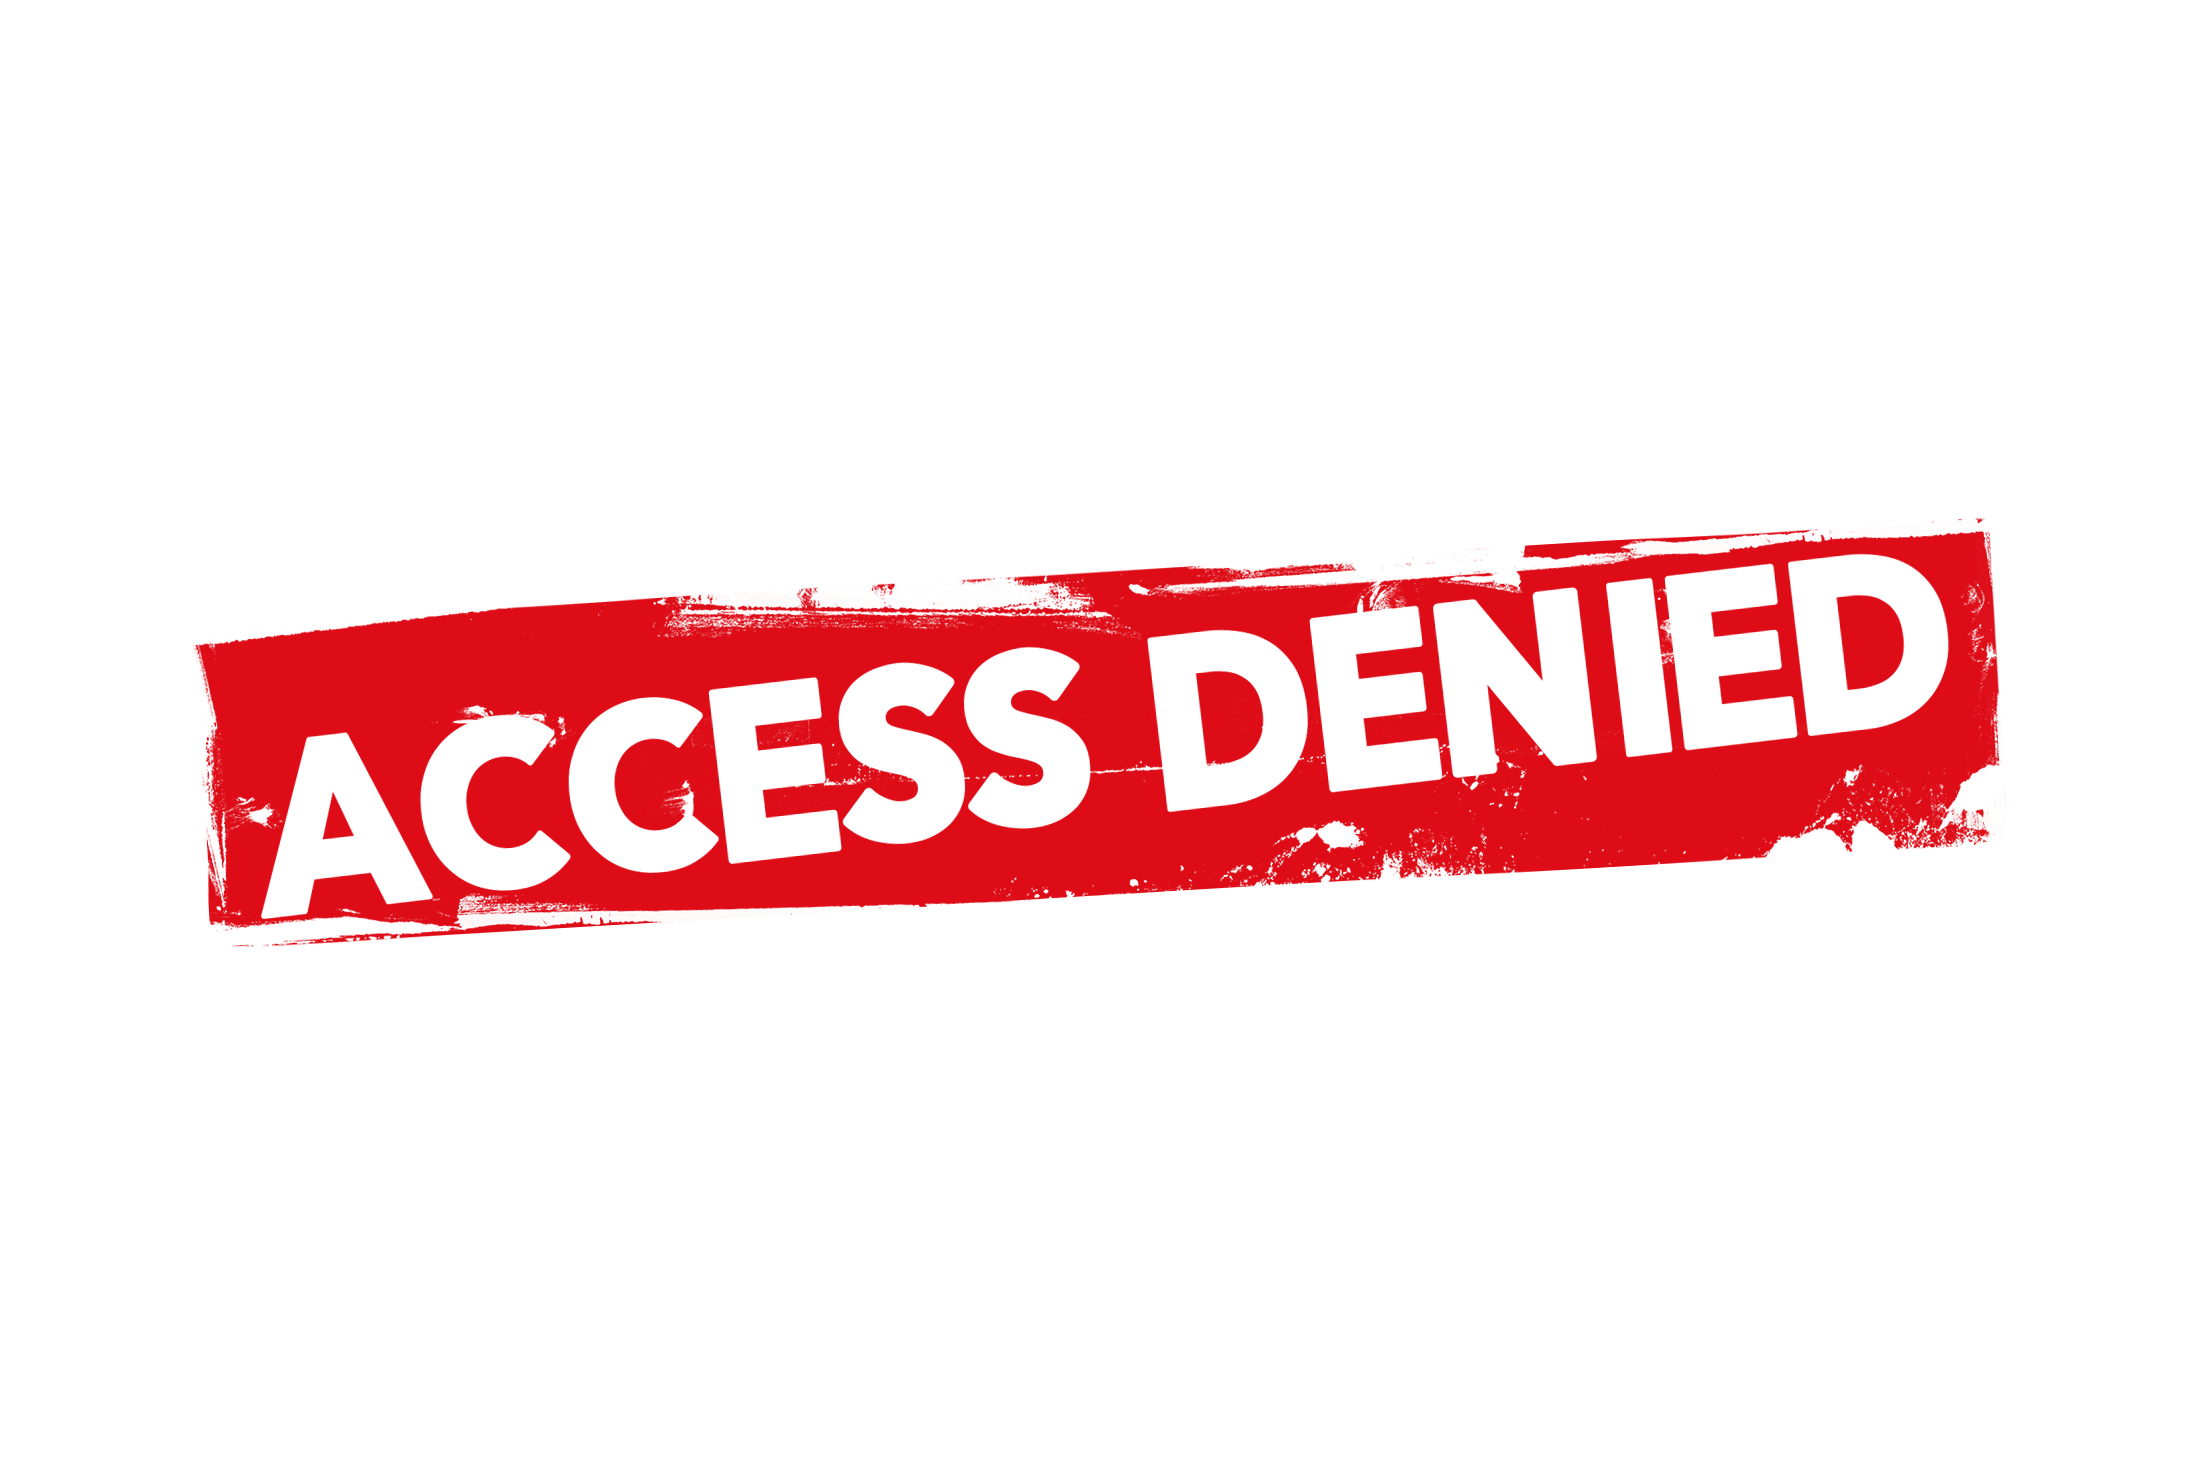 Grunge access denied label PSD